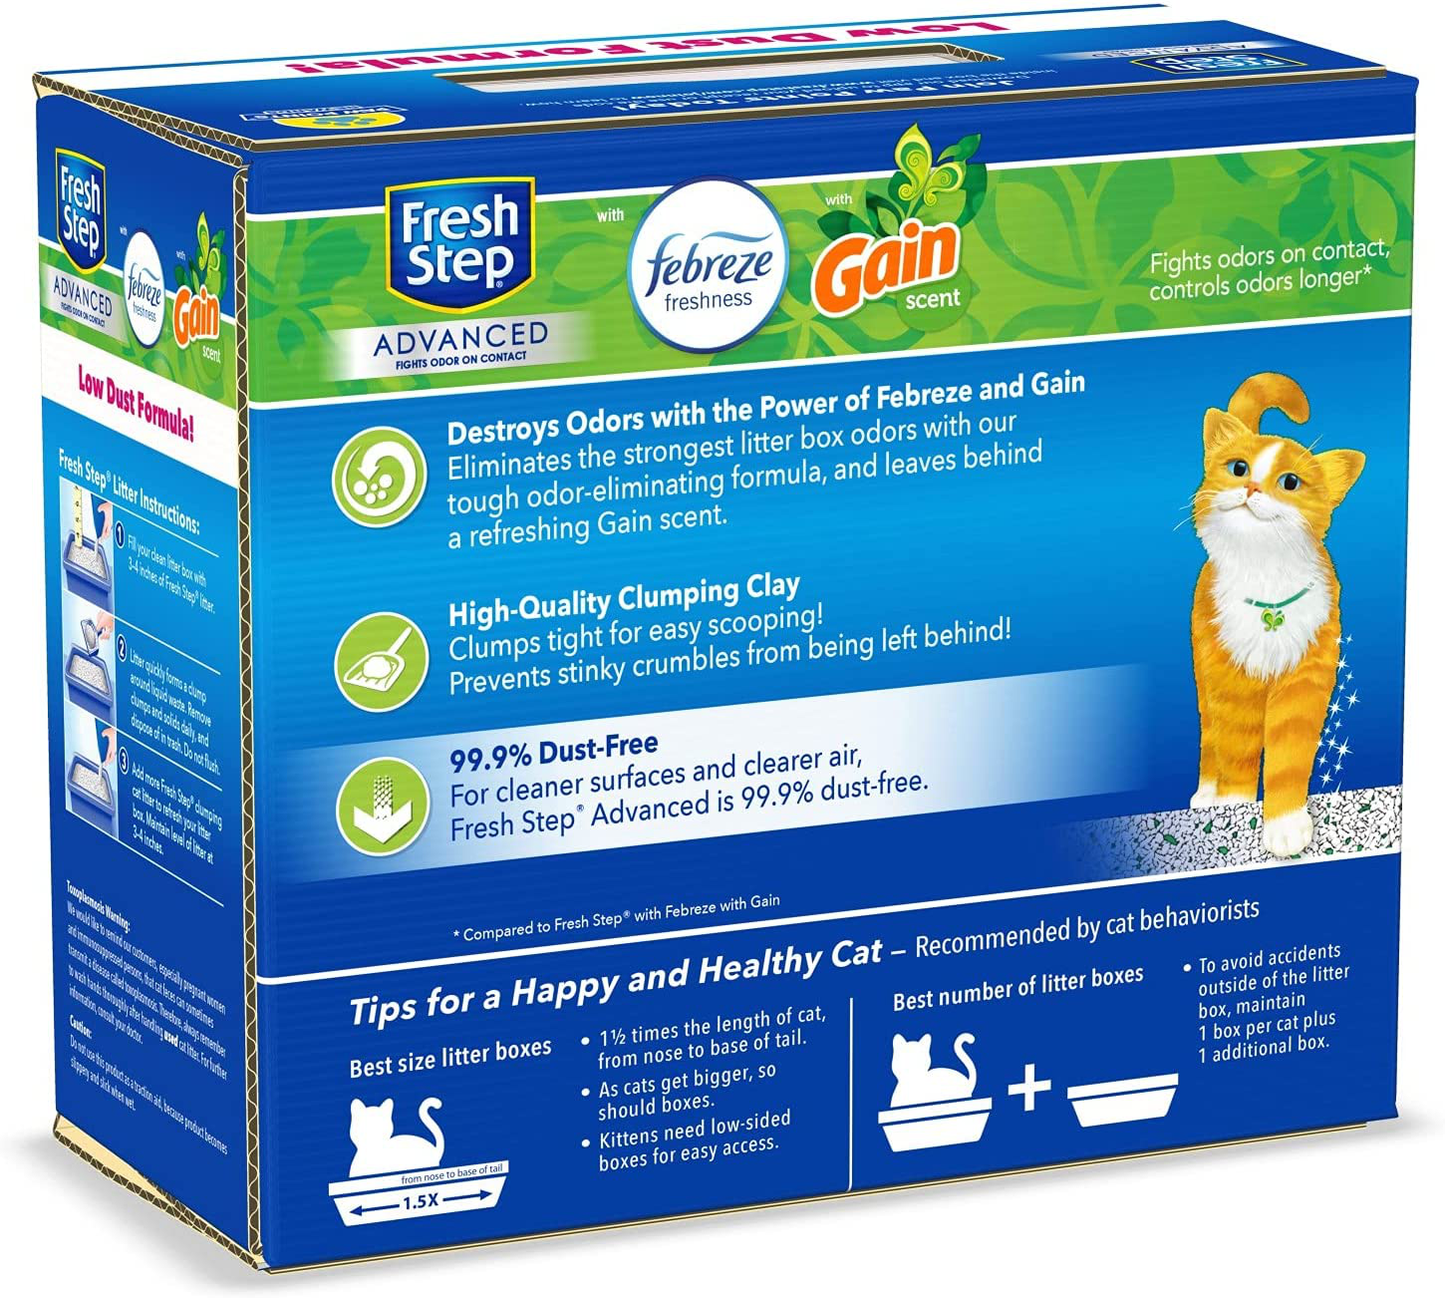 Fresh Step Advanced Cat Litter, Clumping Cat Litter, 99.9% Dust-Free, Gain Scent, 37 Lbs Total ( 2 Pack of 18.5 Lb Boxes) Animals & Pet Supplies > Pet Supplies > Cat Supplies > Cat Litter Fresh Step   